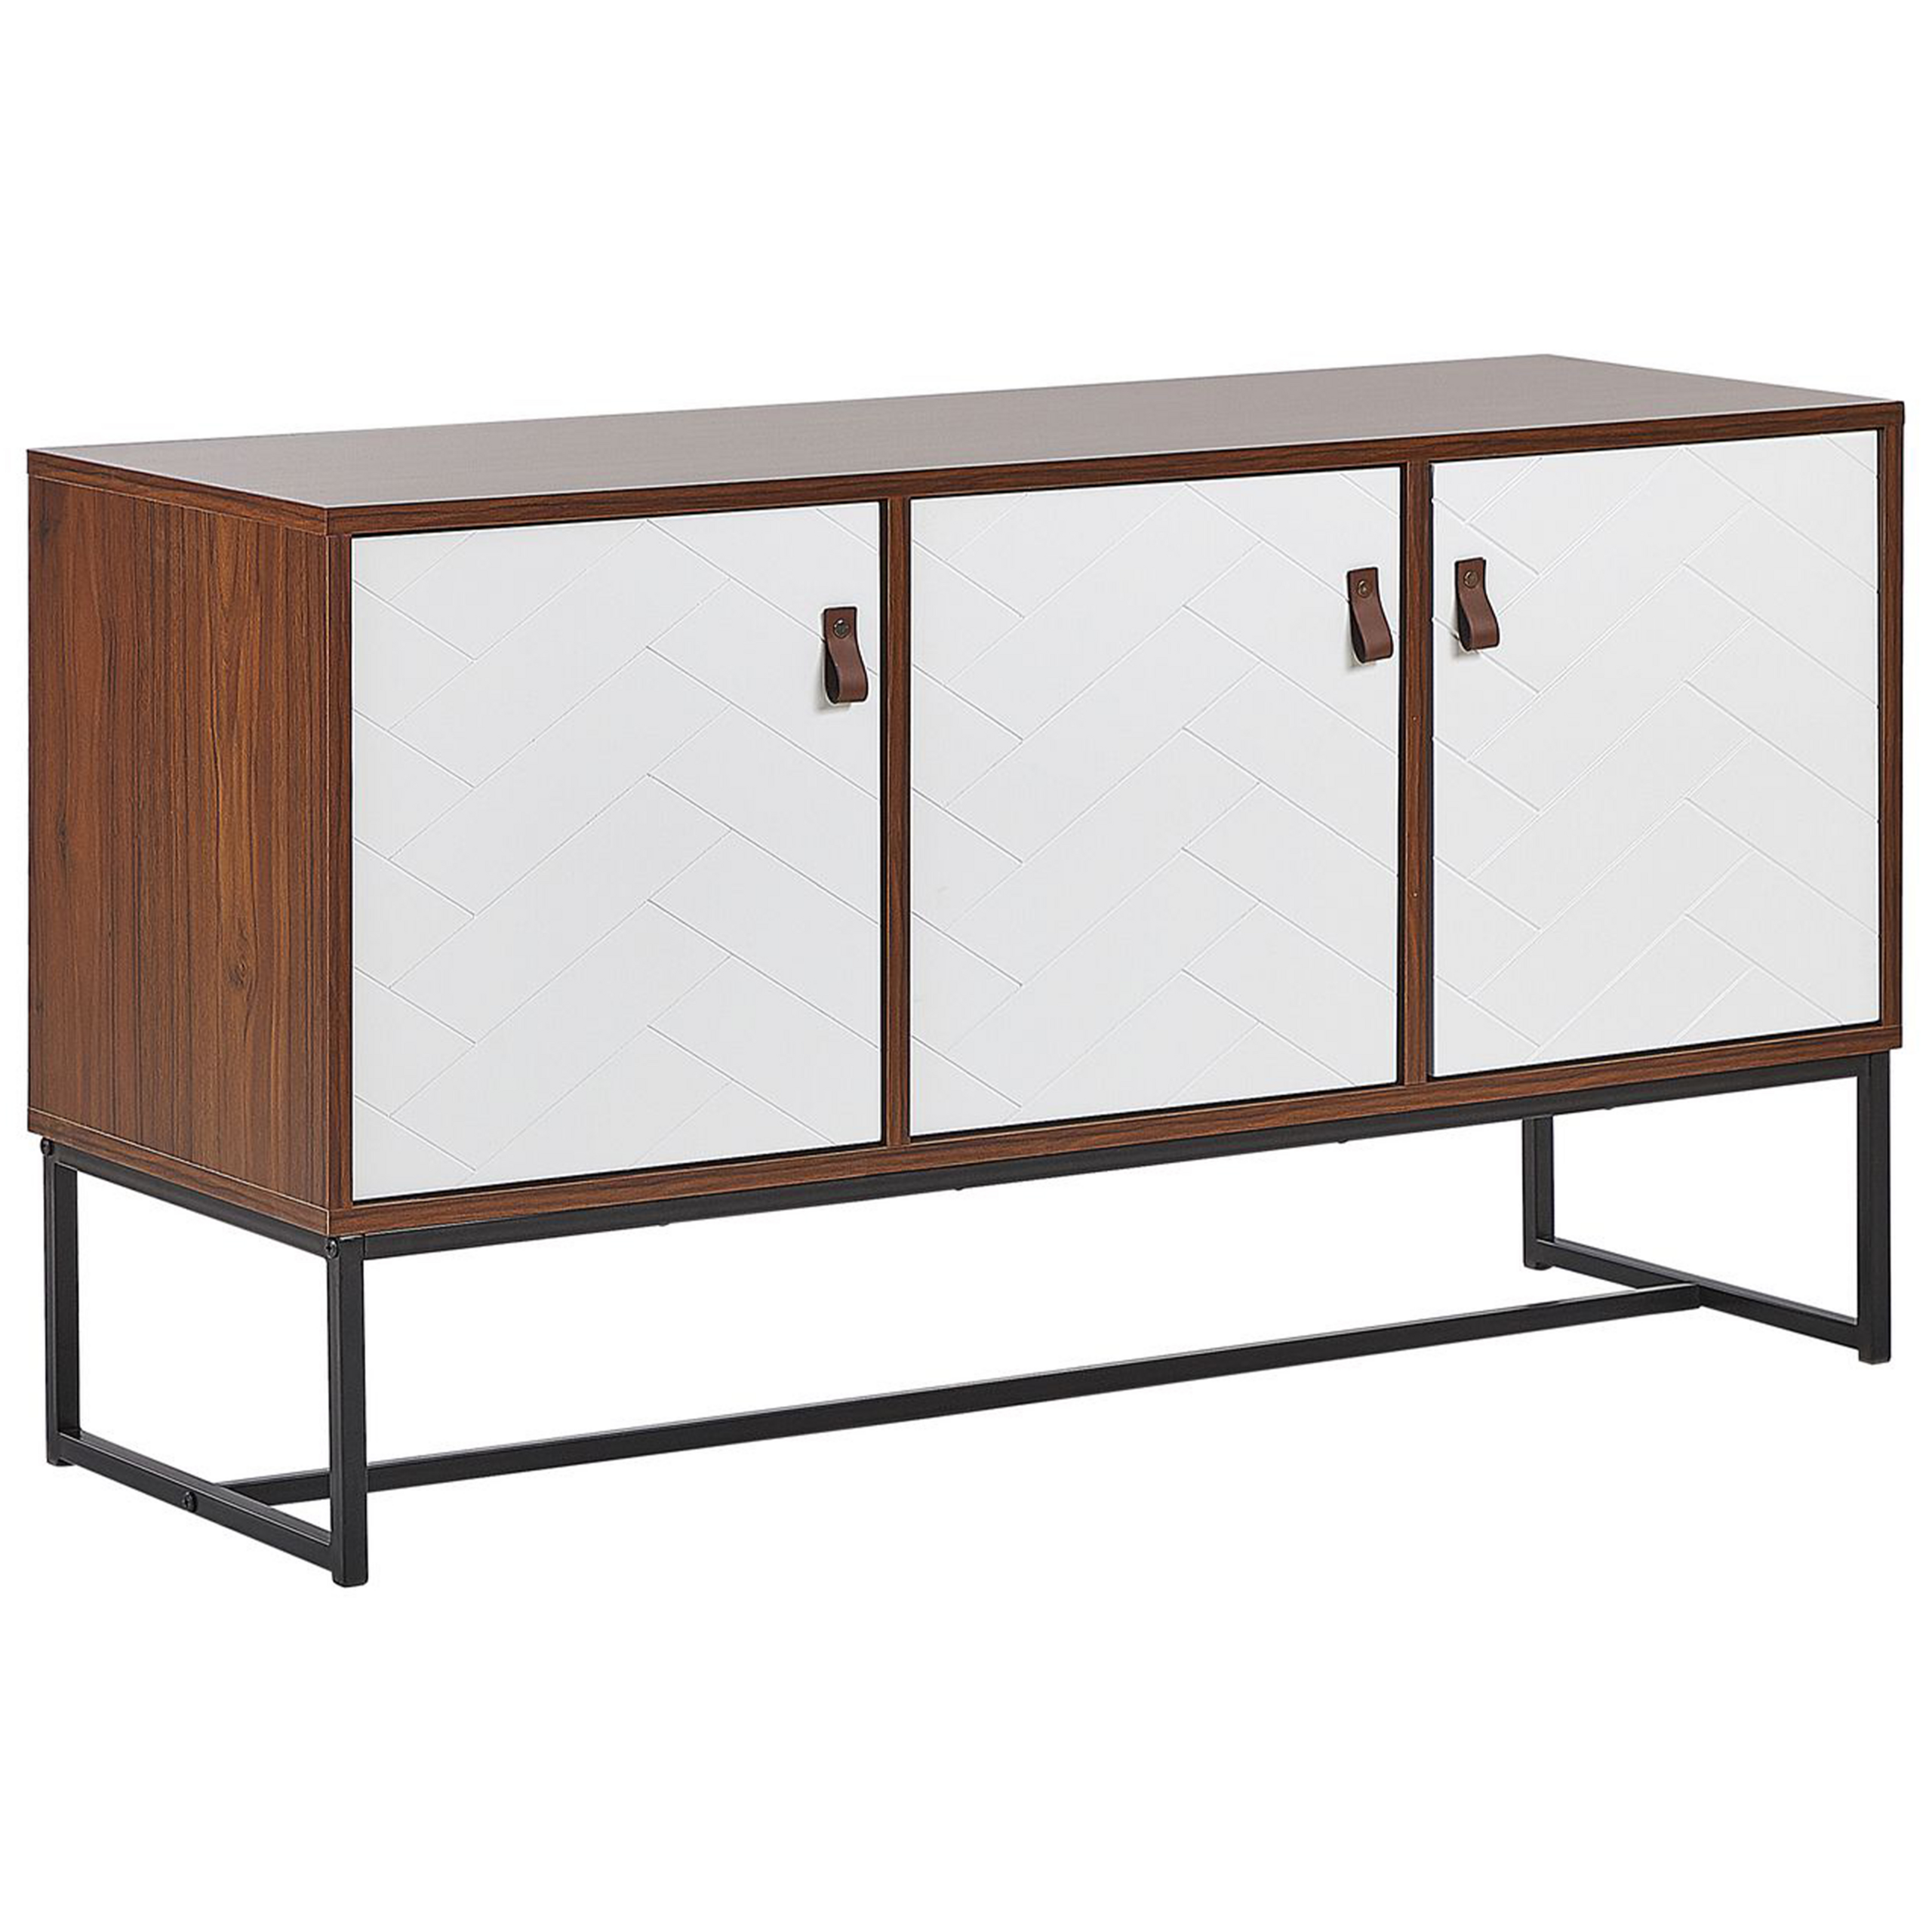 Beliani Sideboard Dark Wood with White Metal Legs Rectangular Storage Cabinet TV Stand 3 Compartments Doors 62 x 112 cm Living Room Furniture